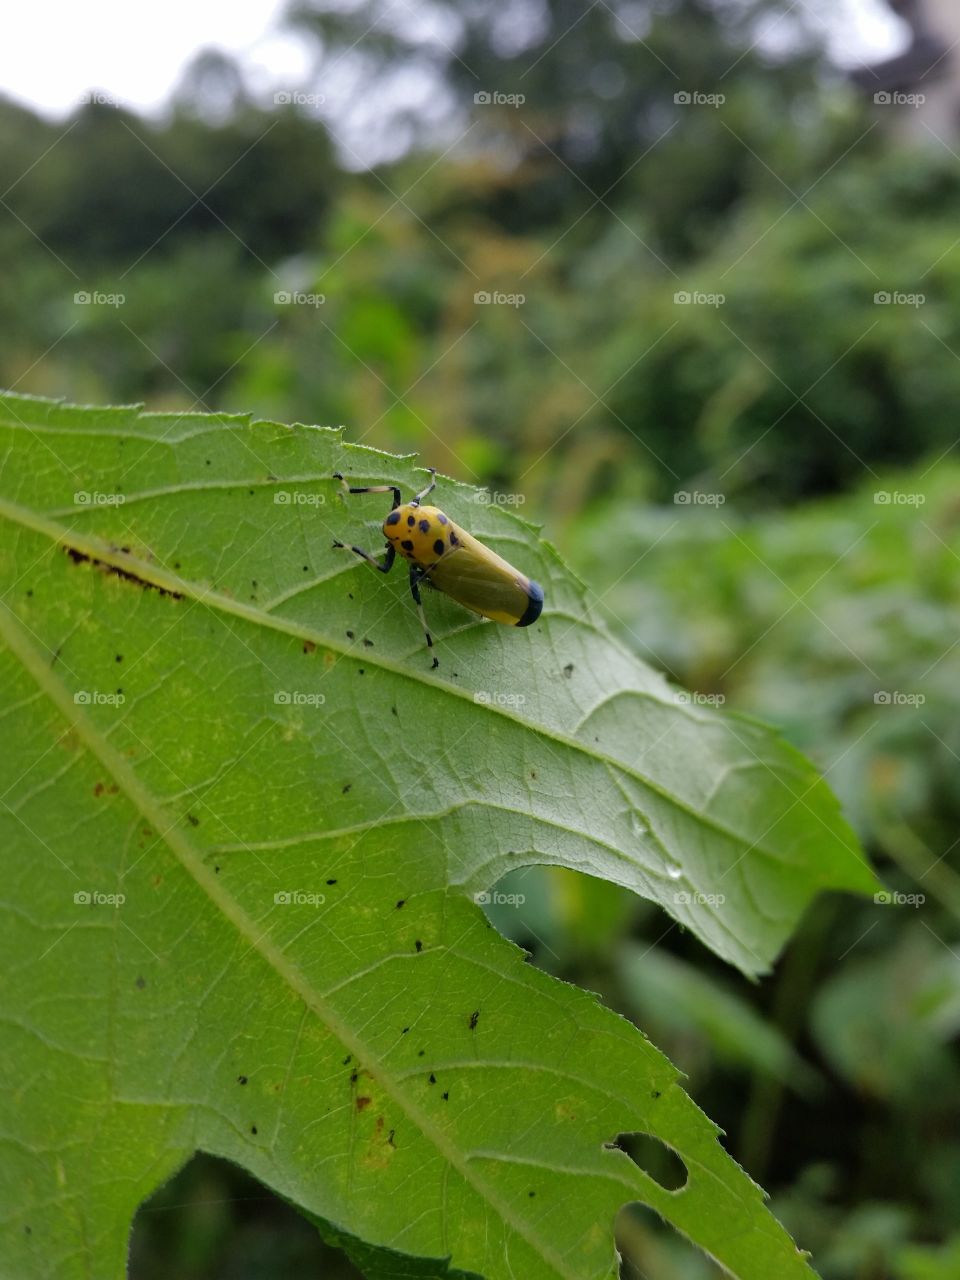 Beet leafhopper